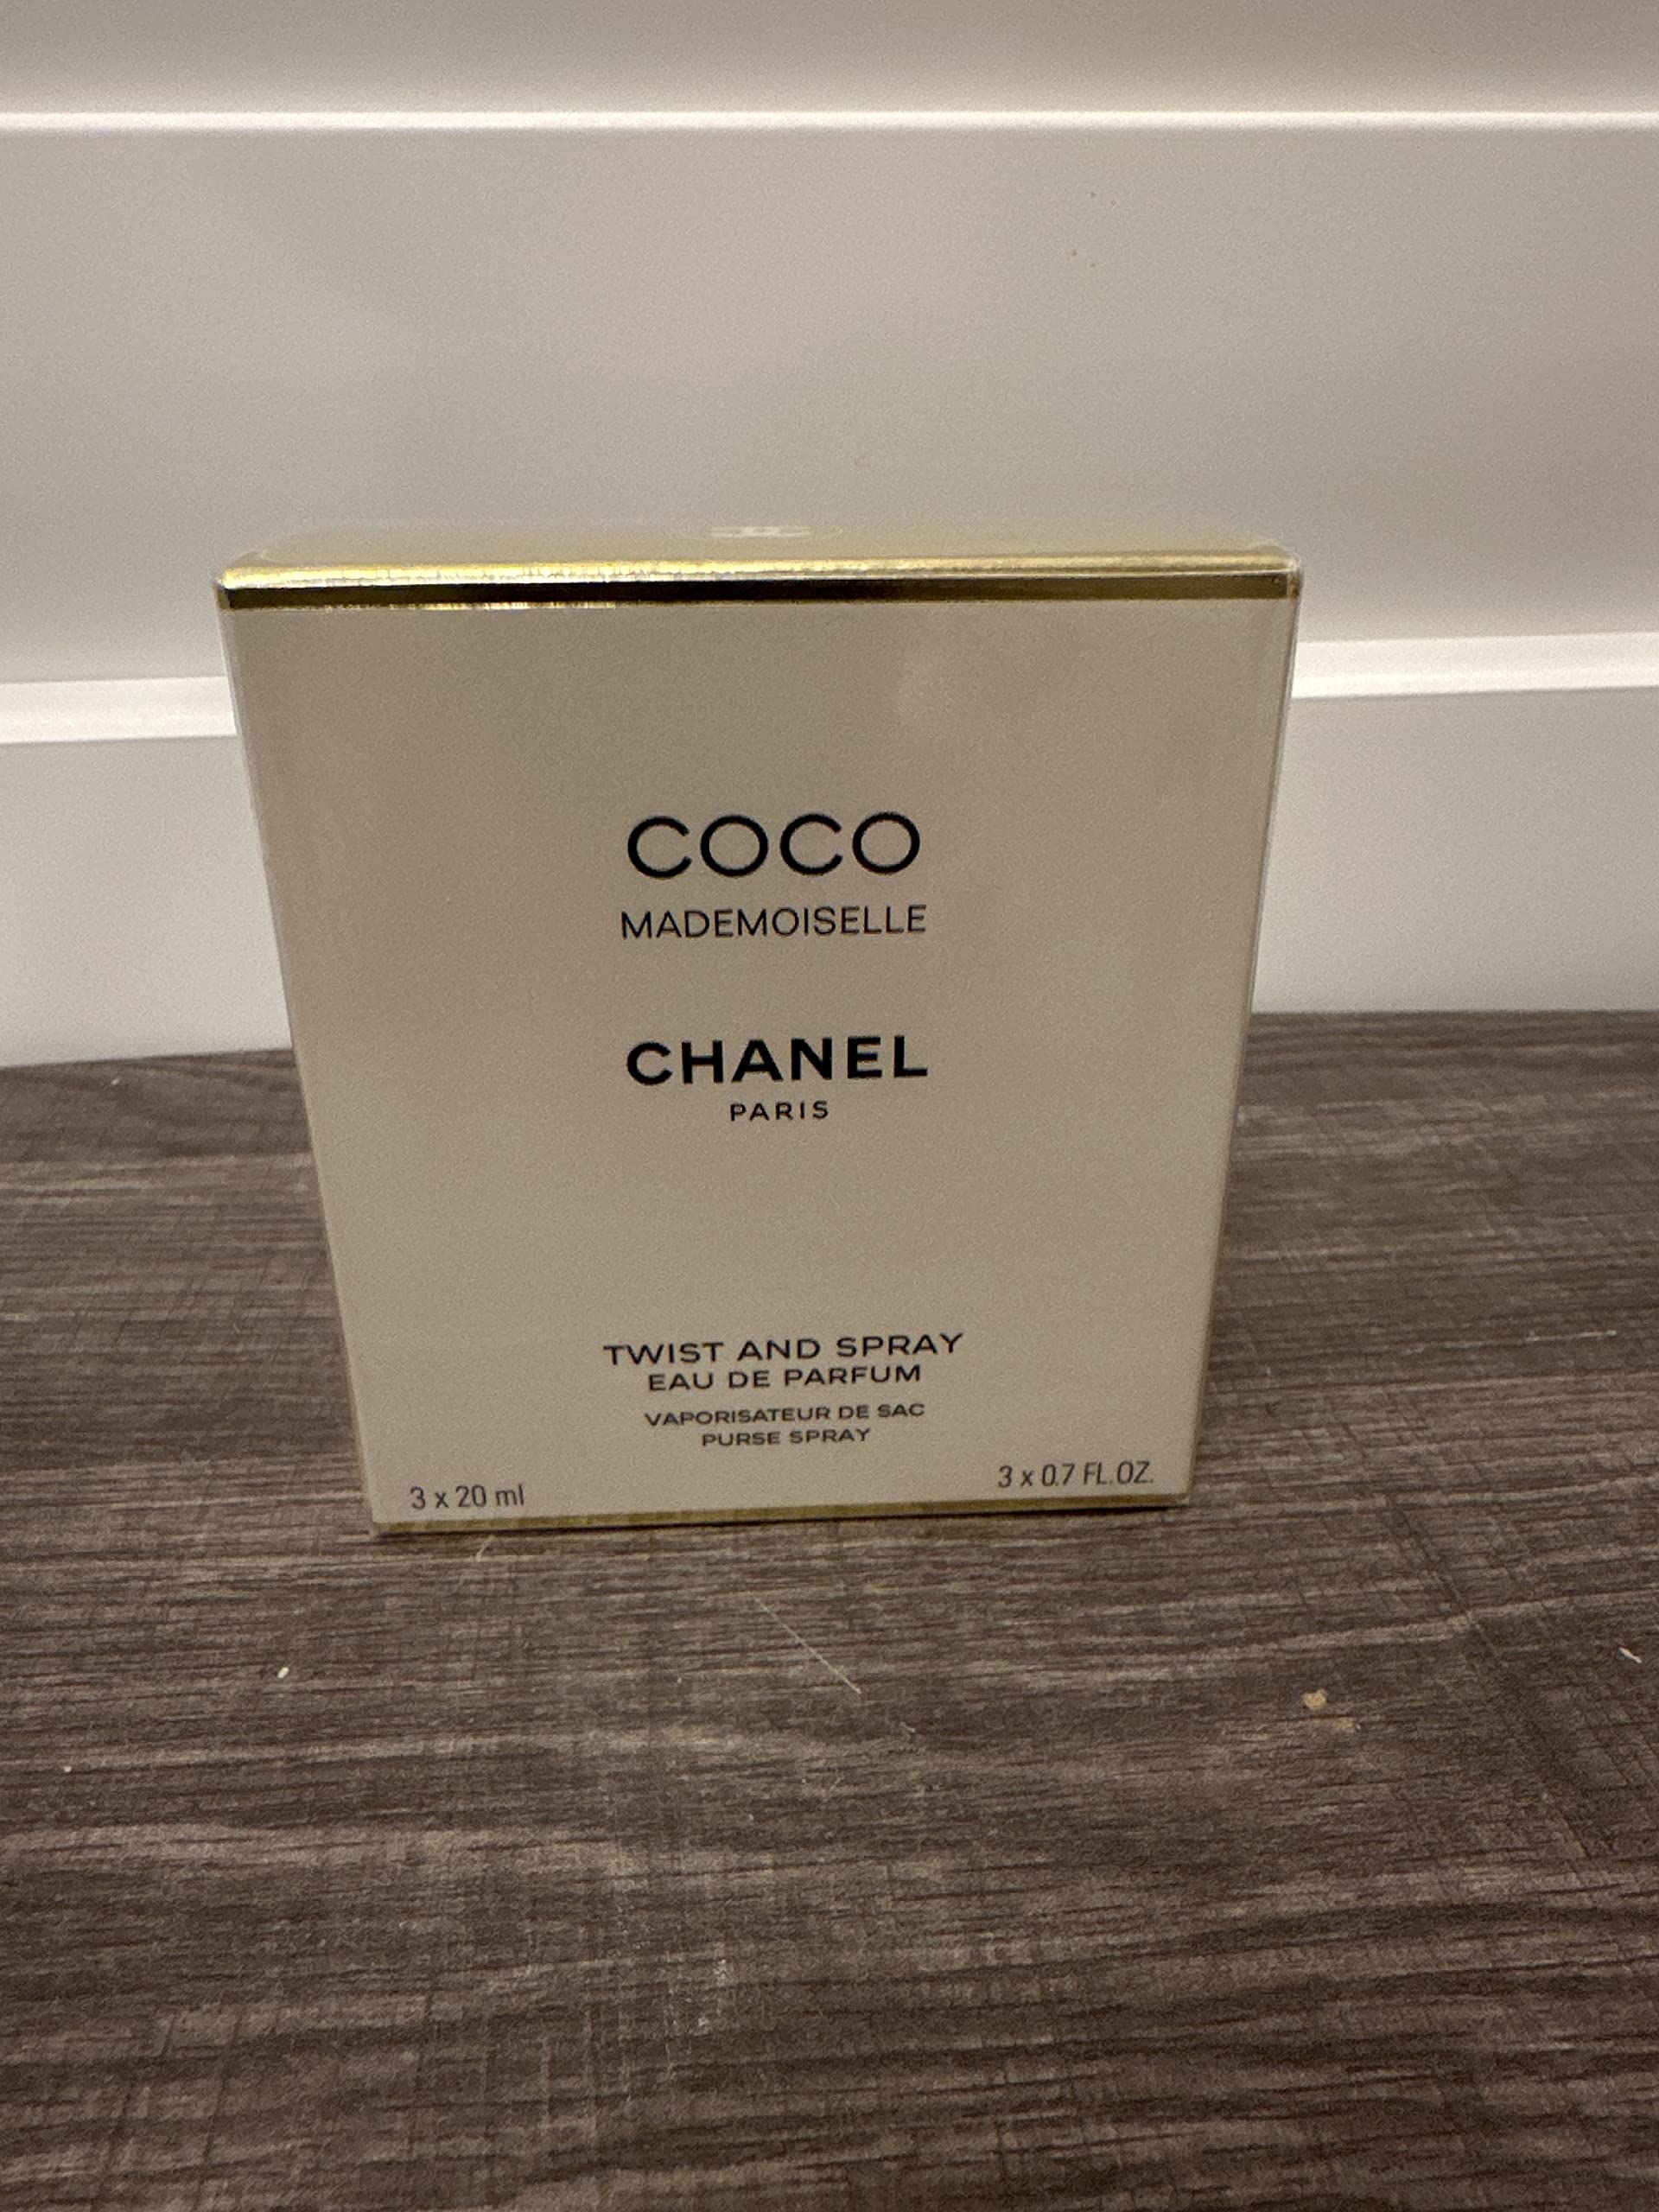 Coco Mademoiselle Chanel Eau de Parfum purse spray refill X 1  20ml  Beauty  Personal Care Fragrance  Deodorants on Carousell